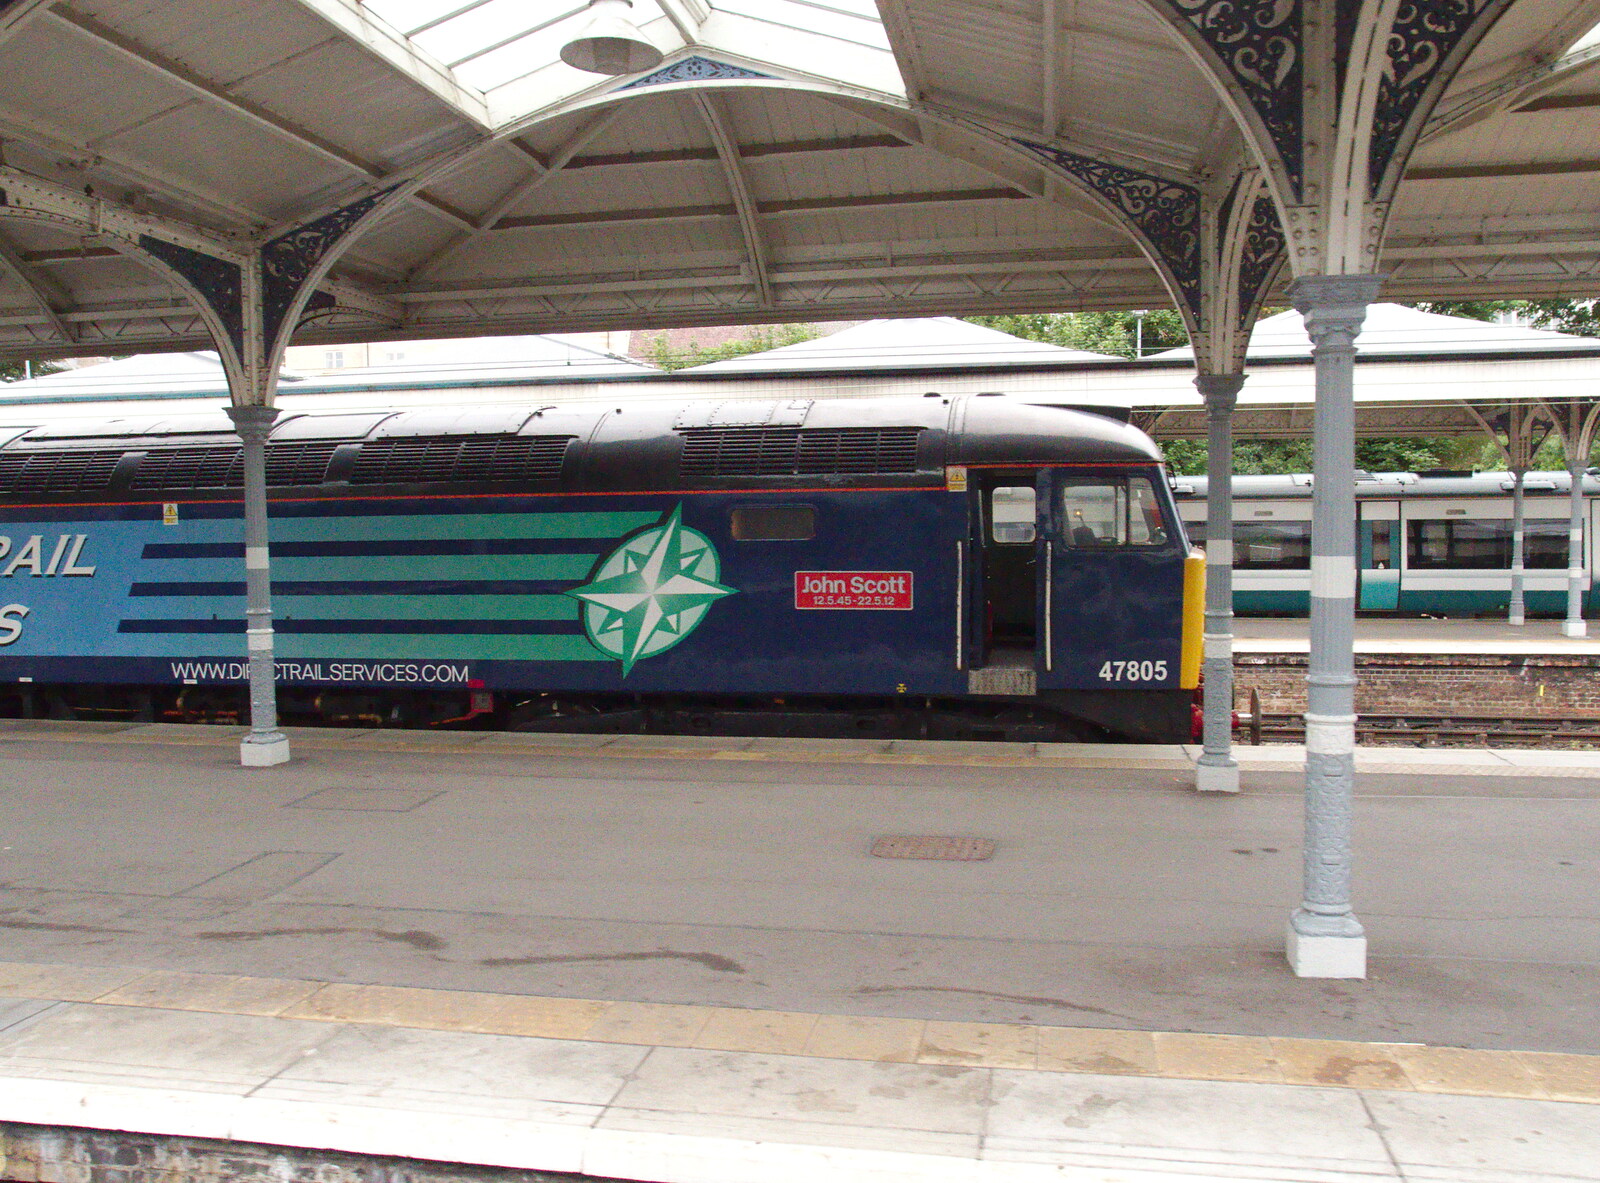 Class 47 47805 The John Scott from Railway Hell: A Pantograph Story, Chelmsford, Essex - 17th June 2014